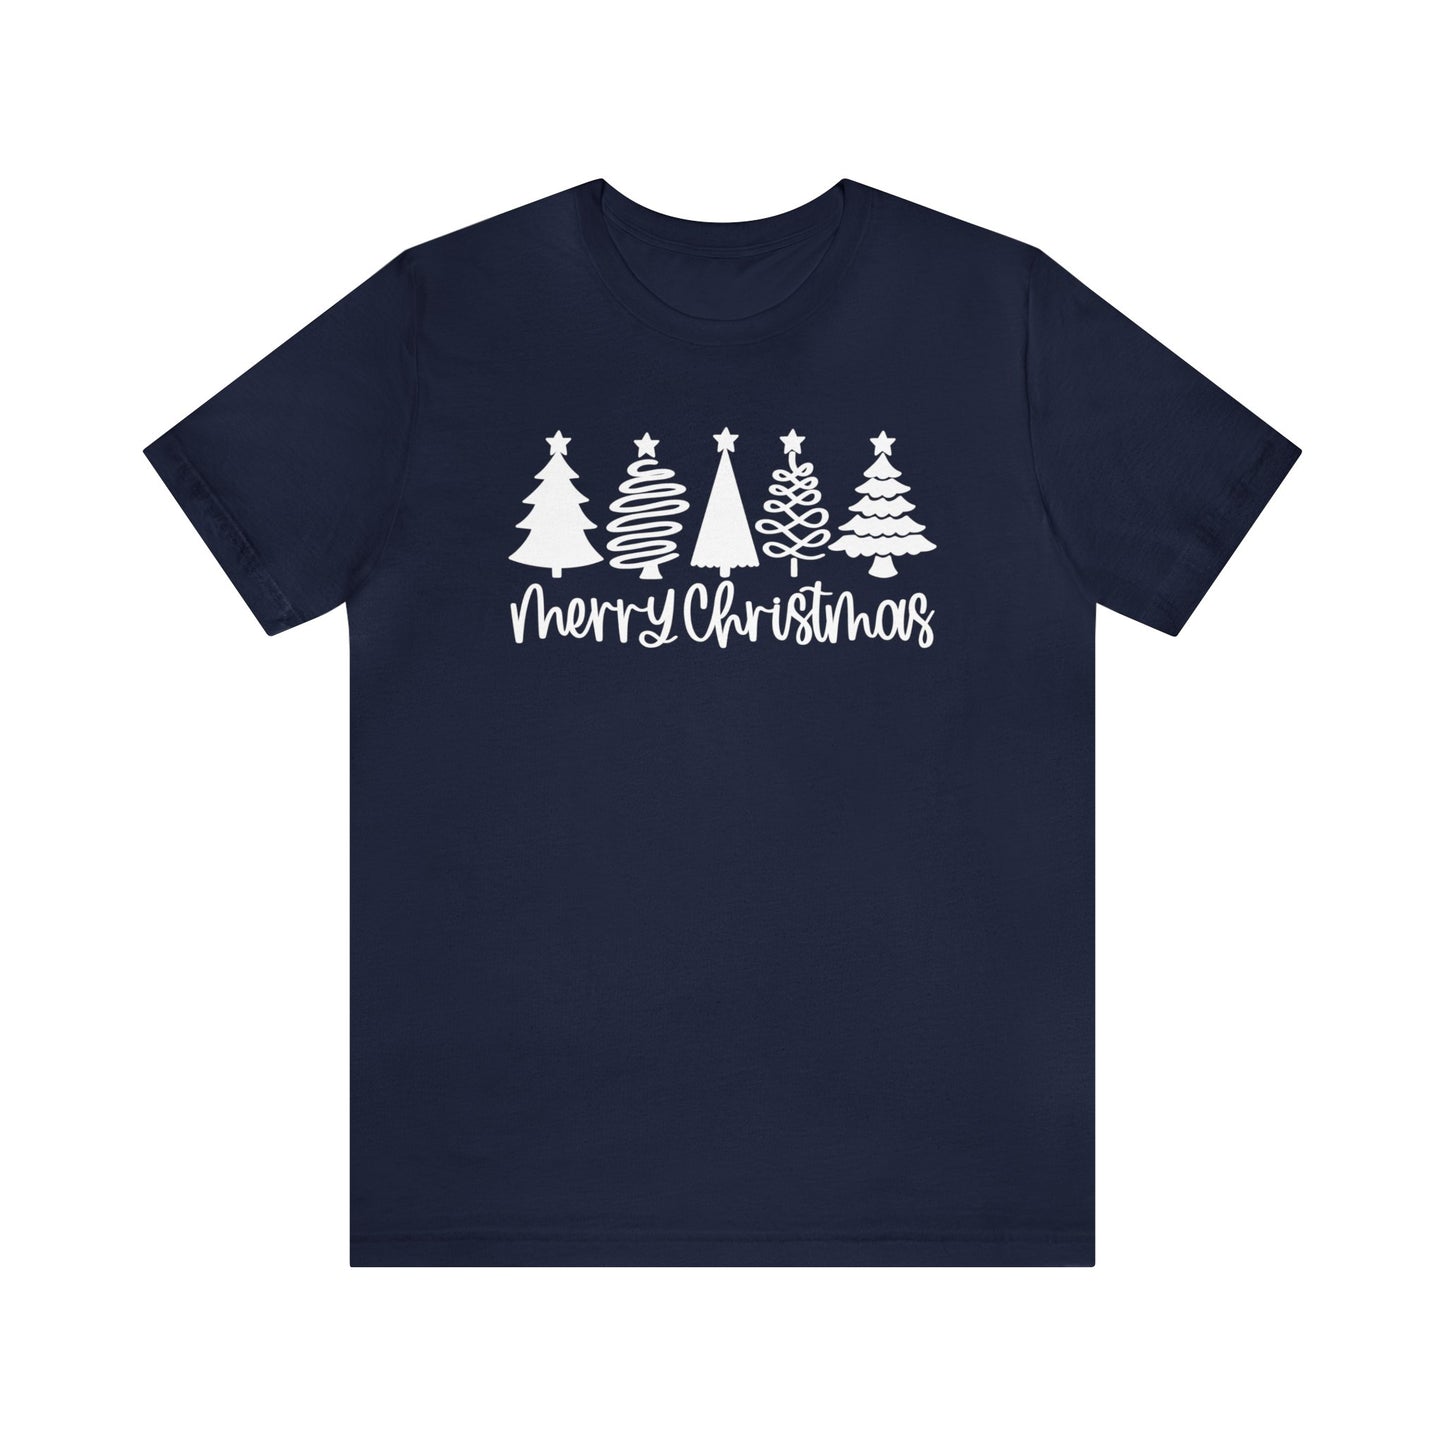 Merry Christmas Trees Christmas Shirt Short Sleeve Tee